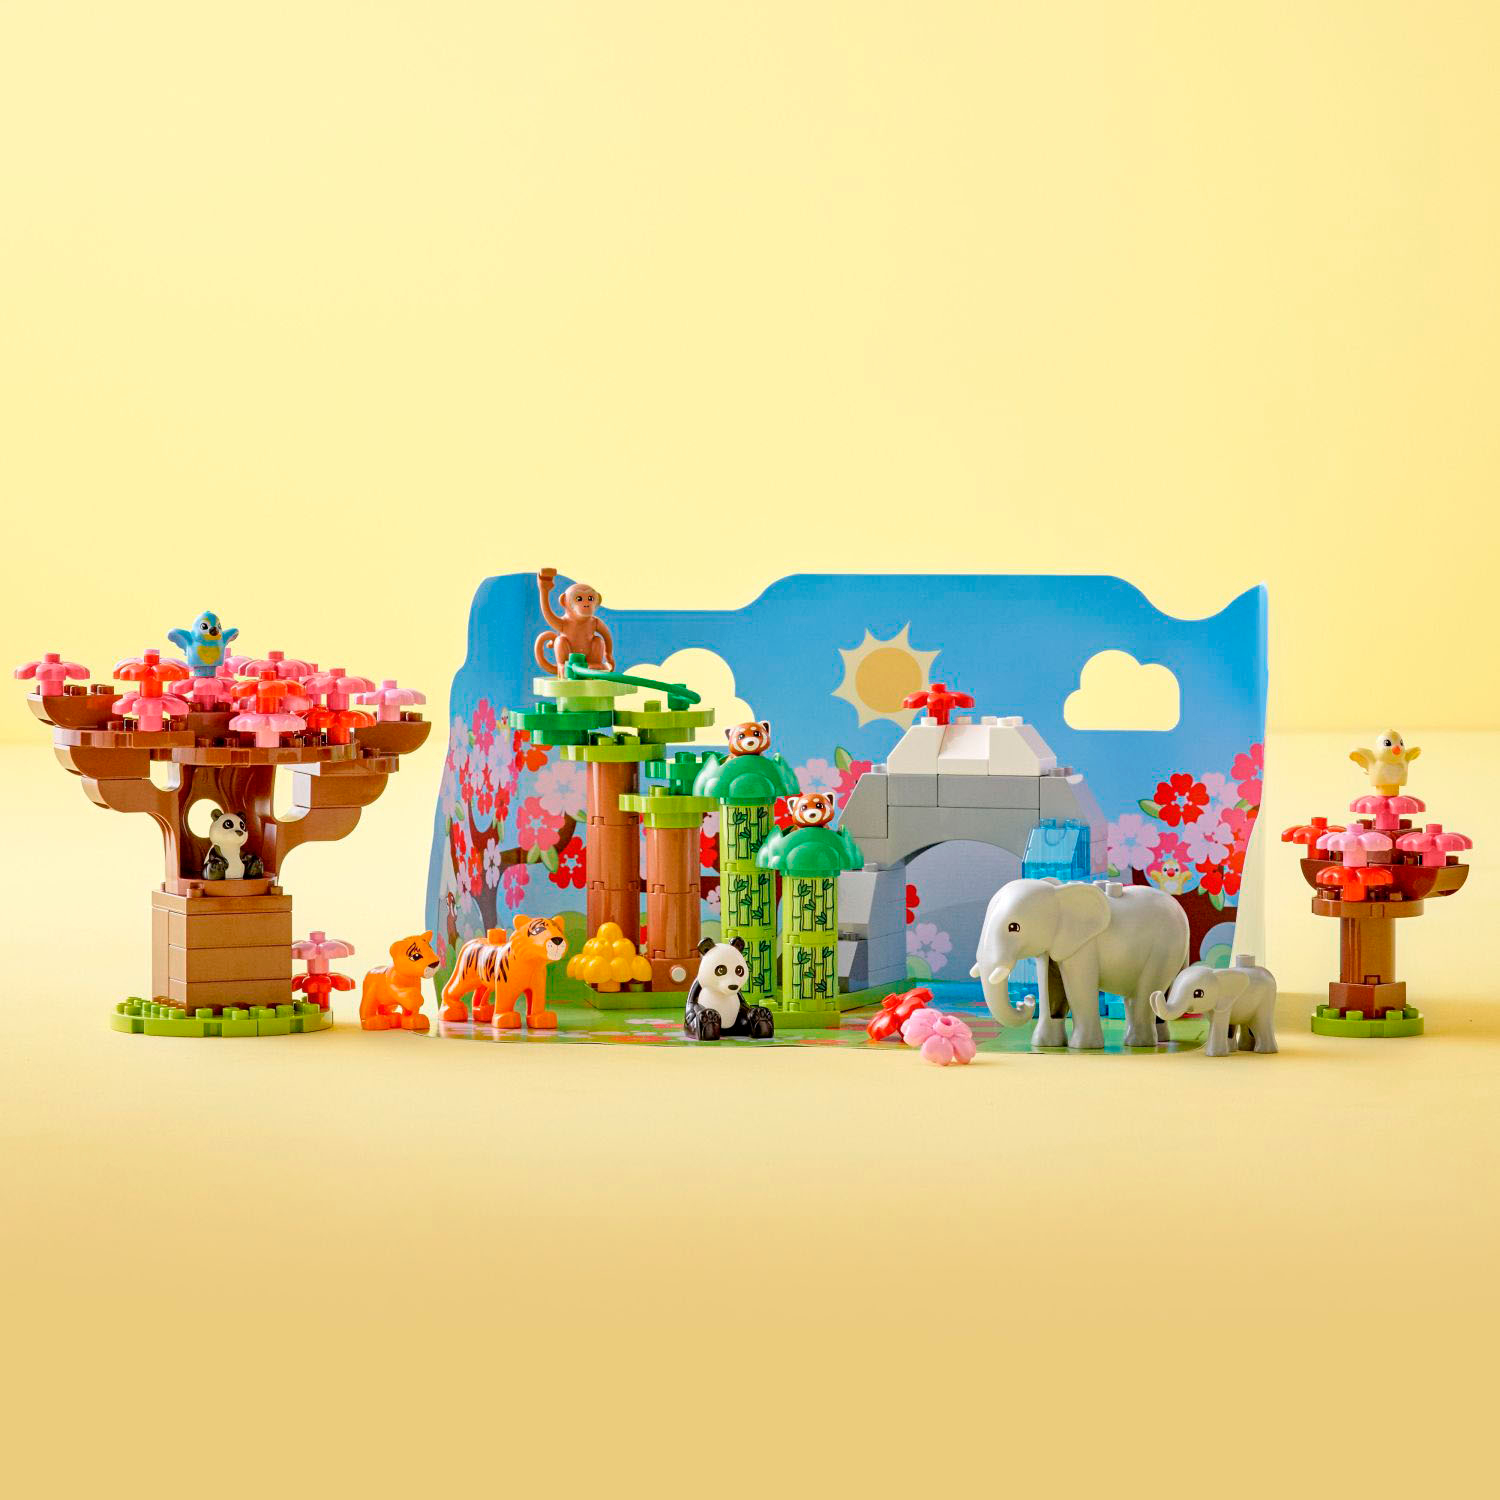 LEGO DUPLO Wild Animals of Asia 10974 6379269 - Best Buy